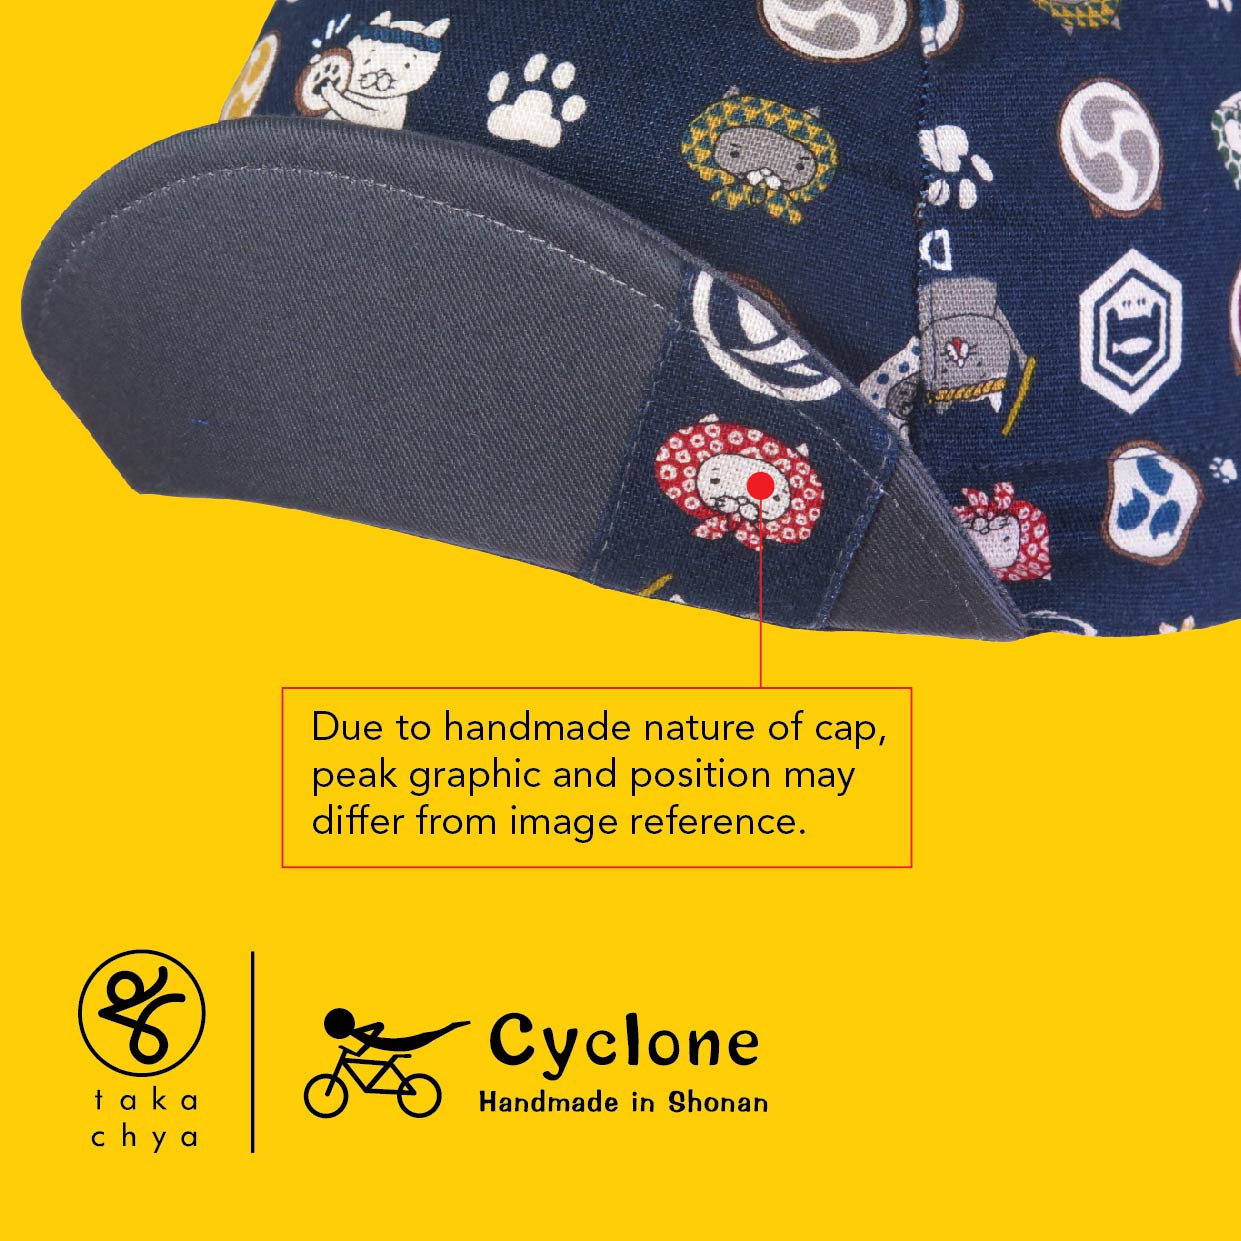 Festive Cat - Cyclone Chee Japanese Handmade Cycling Cap